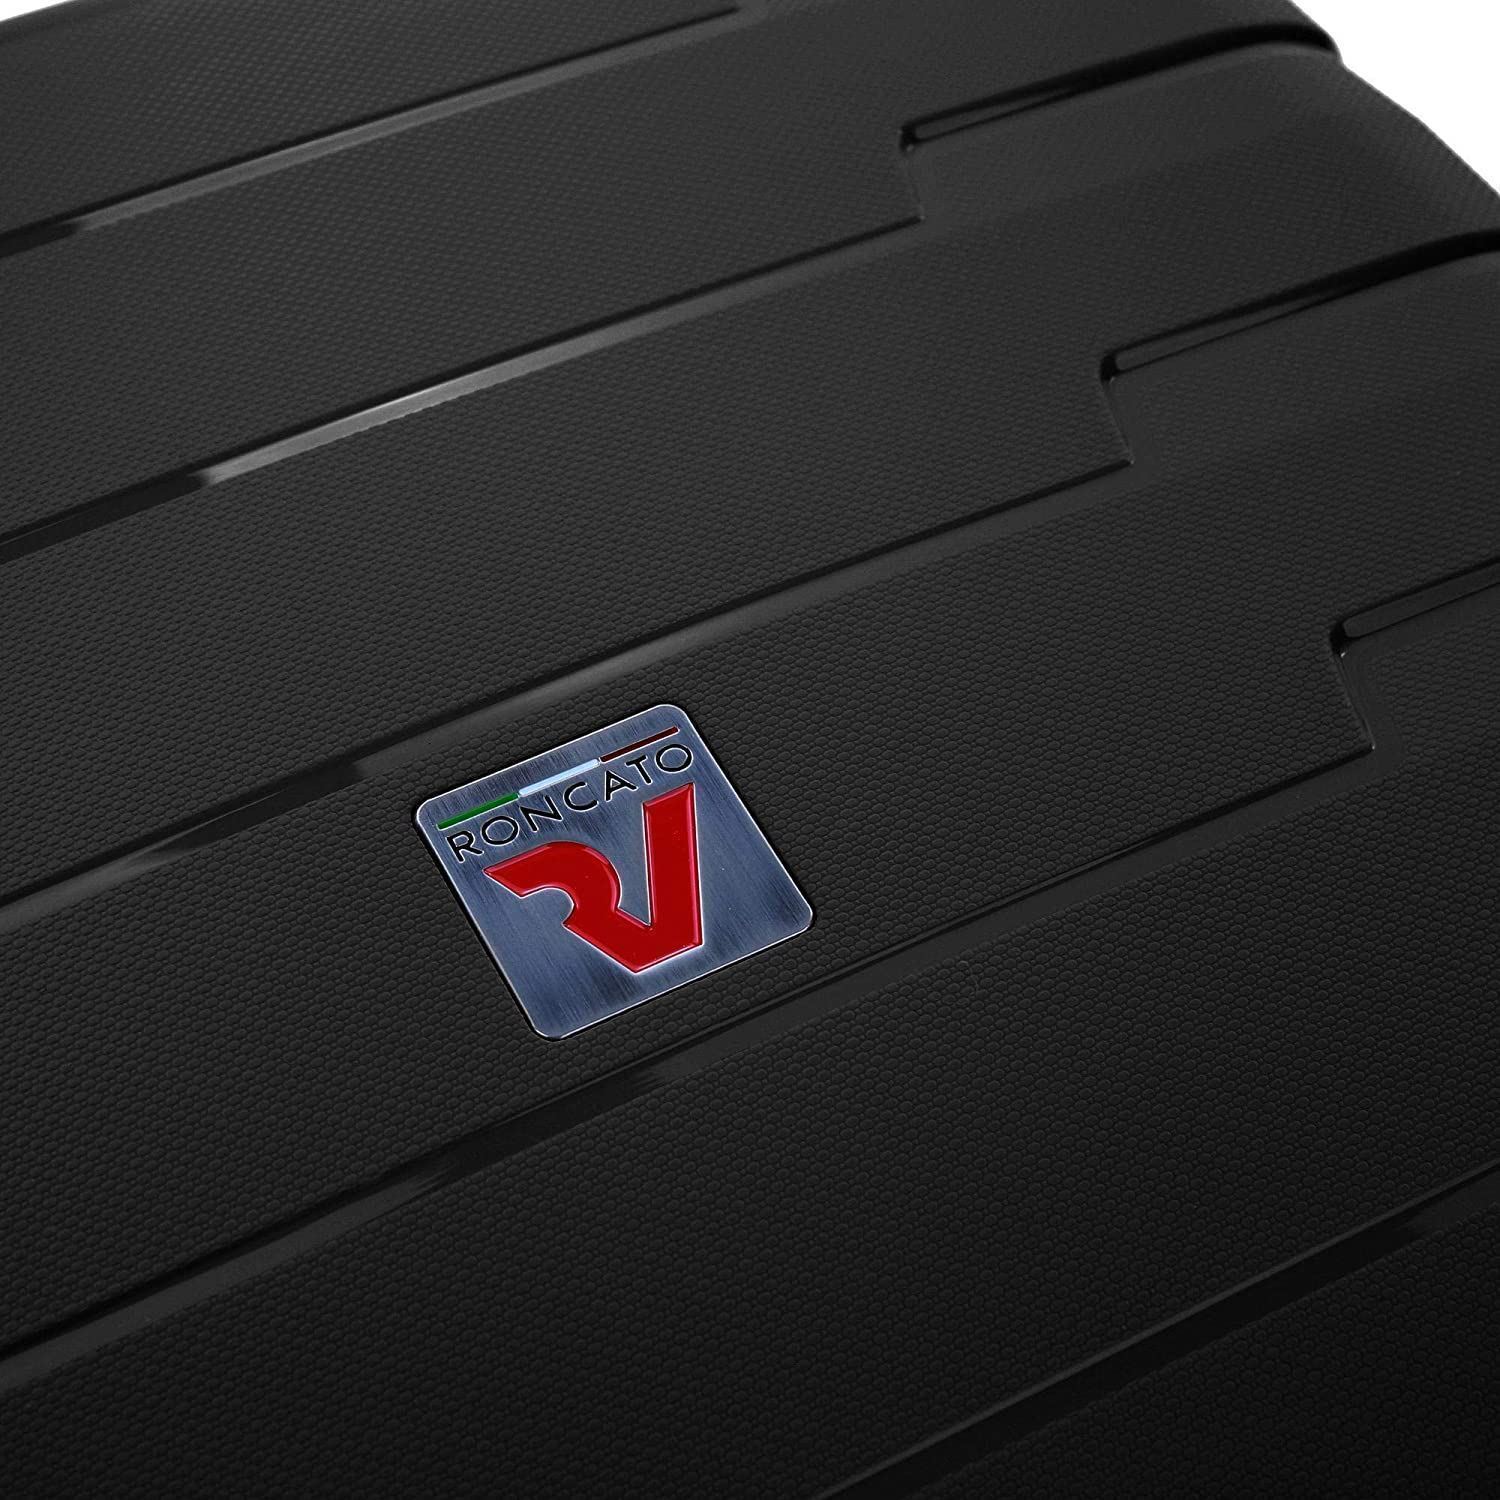 Roncato Maleta Cabina Rigida Skyline Expandible color Negro USB Garantia 5 años - Imagen 9